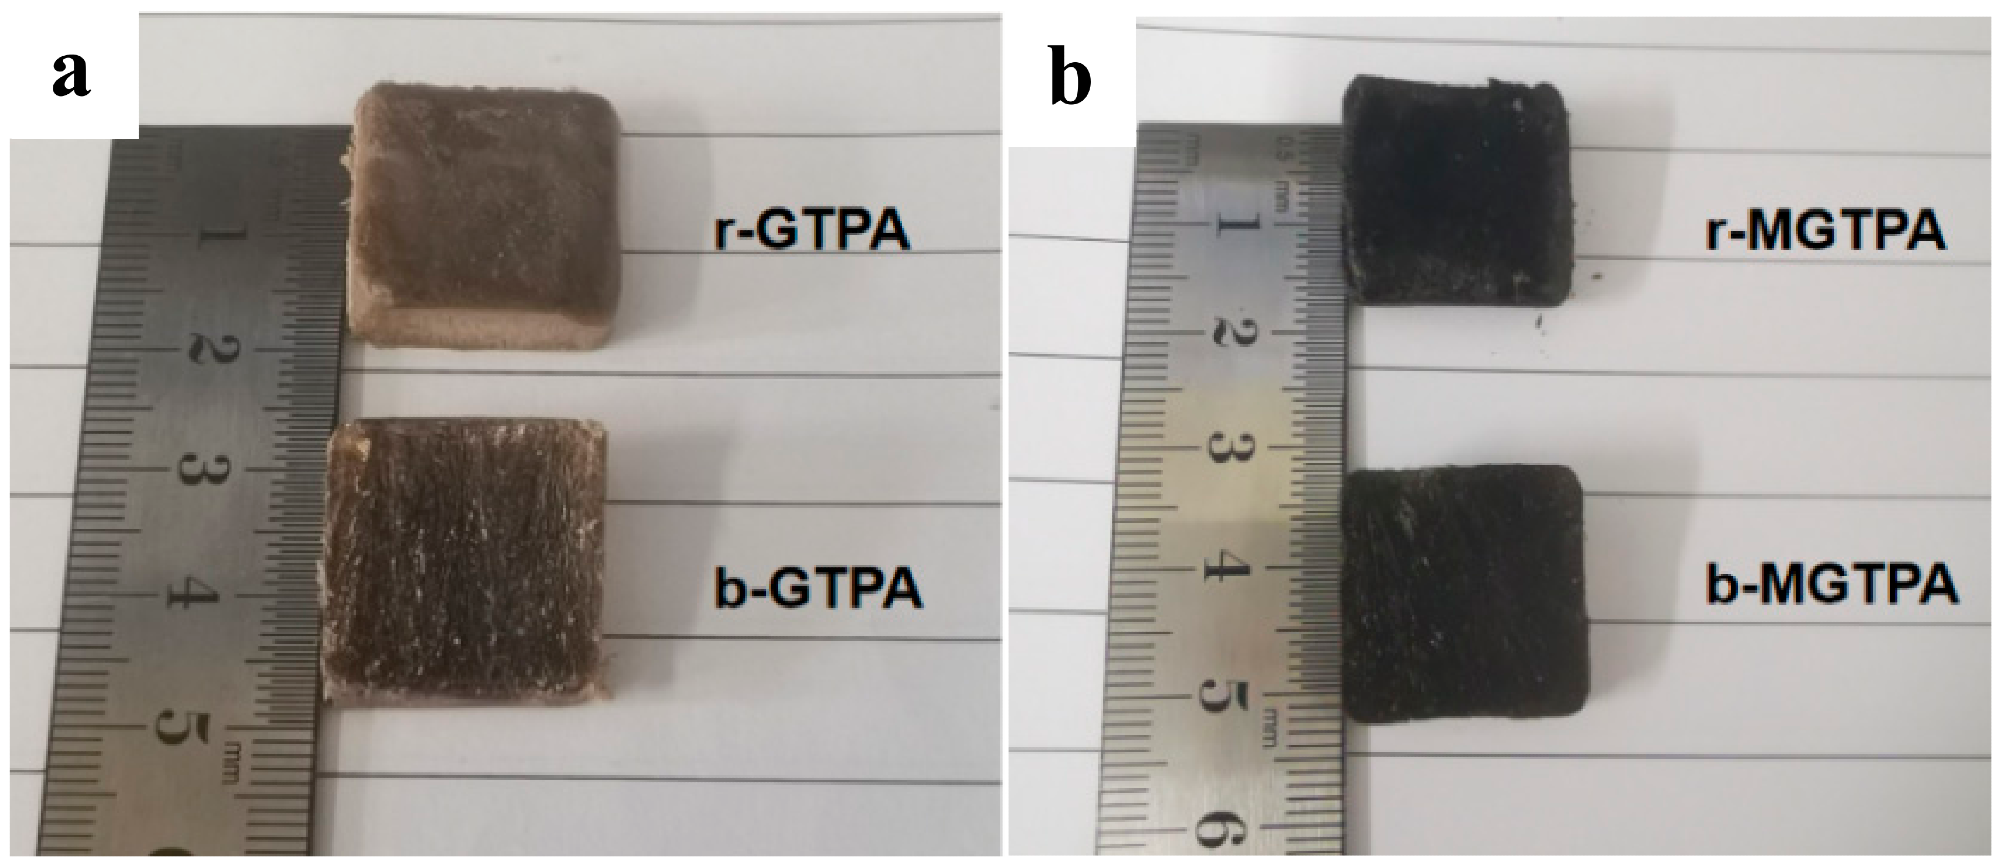 (a) Photograph of r-GTPA and b-GTPA. (b) Photograph of r-MGTPA and b-MGTPA.